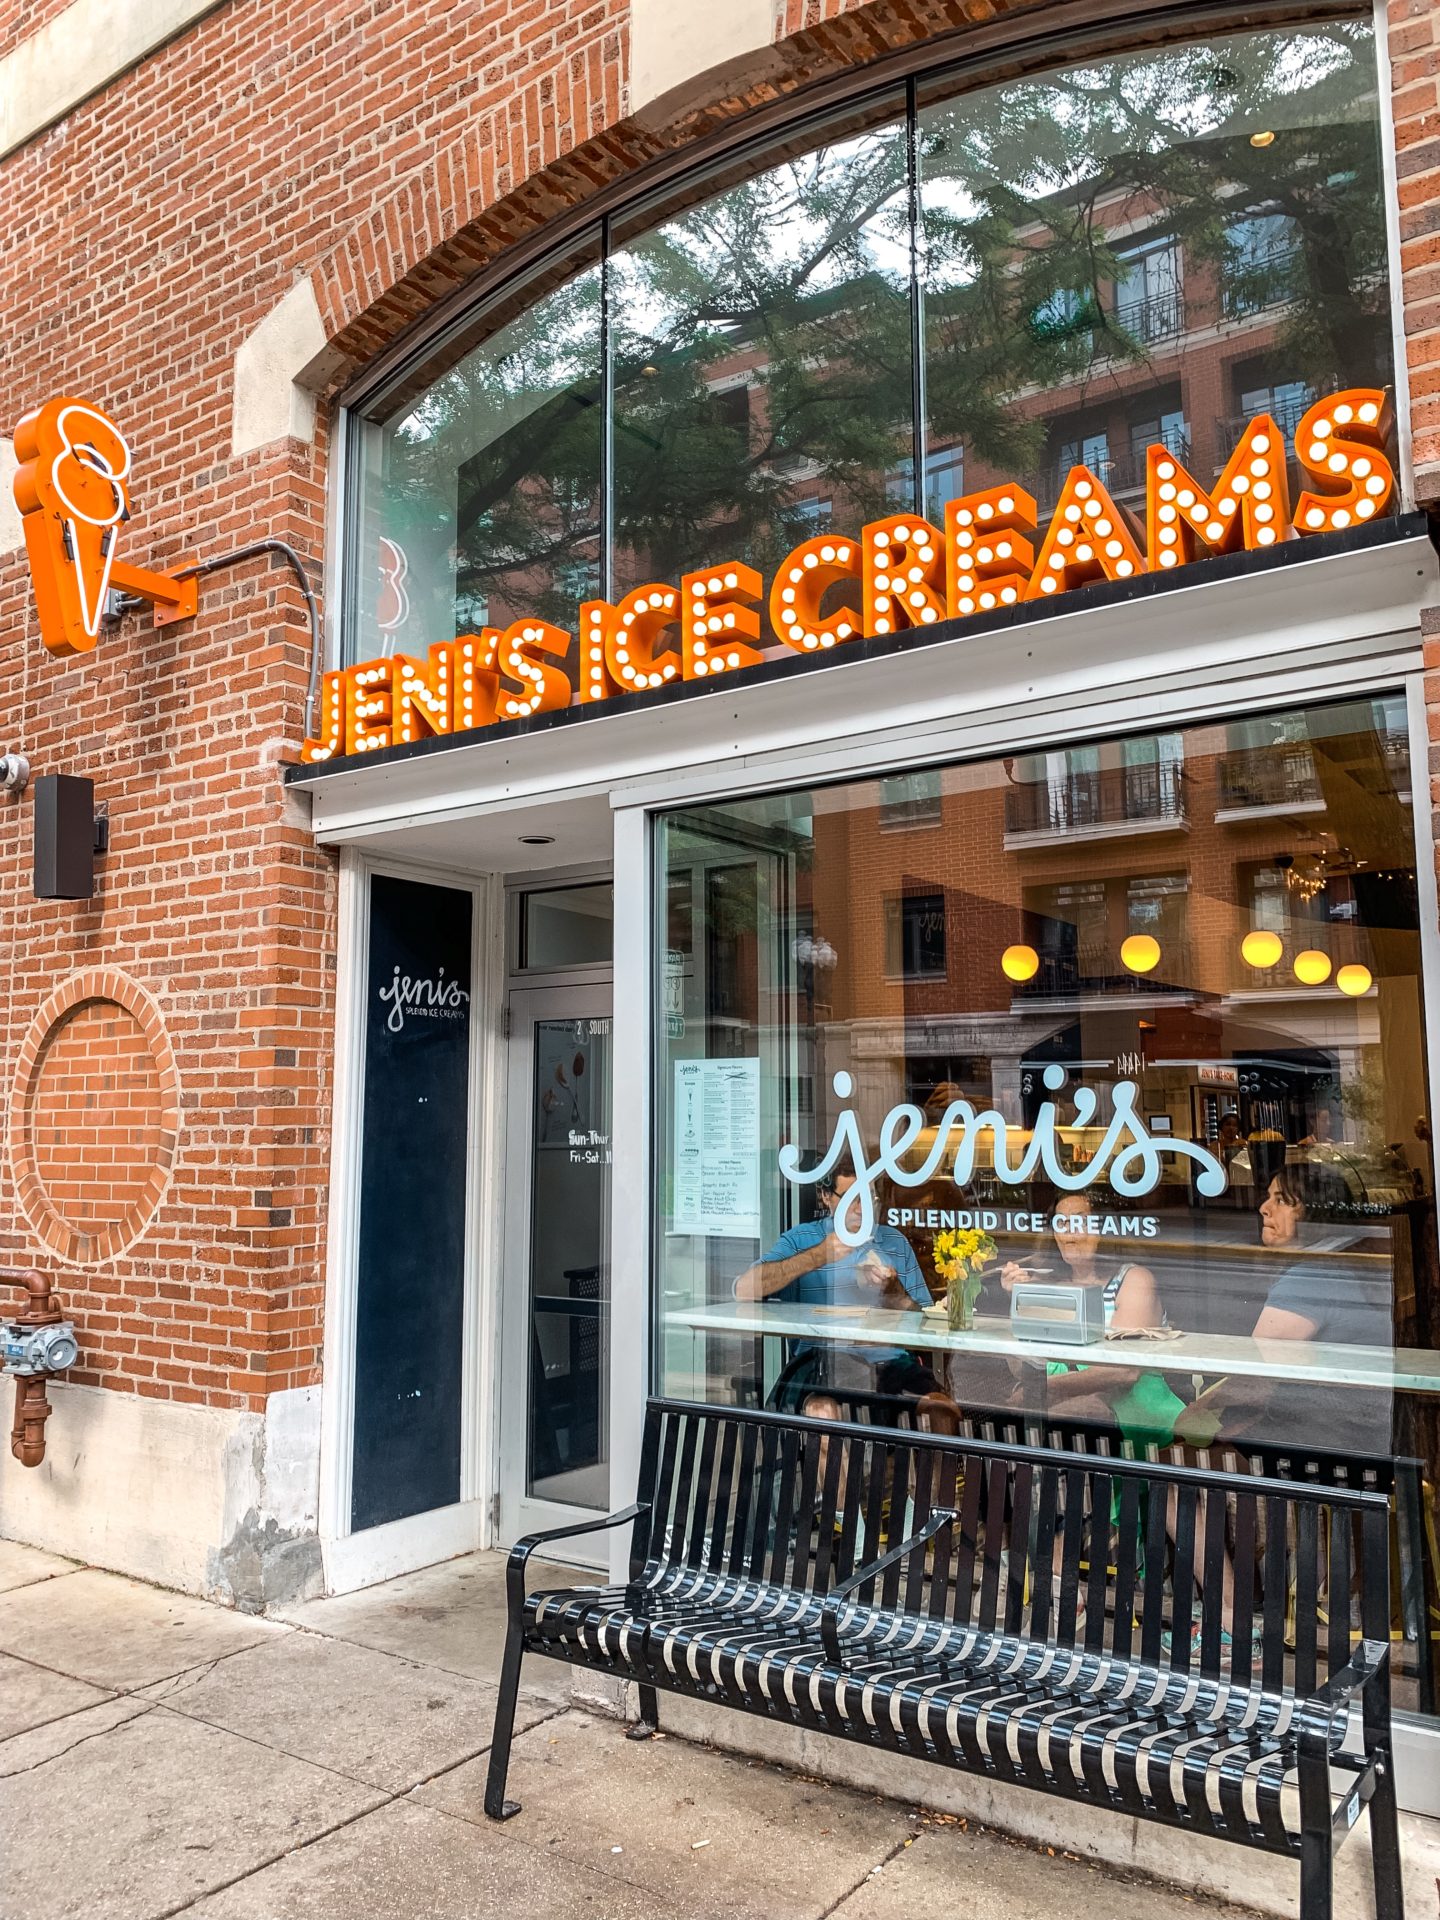 Binja the Africancocktail photograph of Jeni's Splendid Ice Cream Parlor in Chicago Illinois